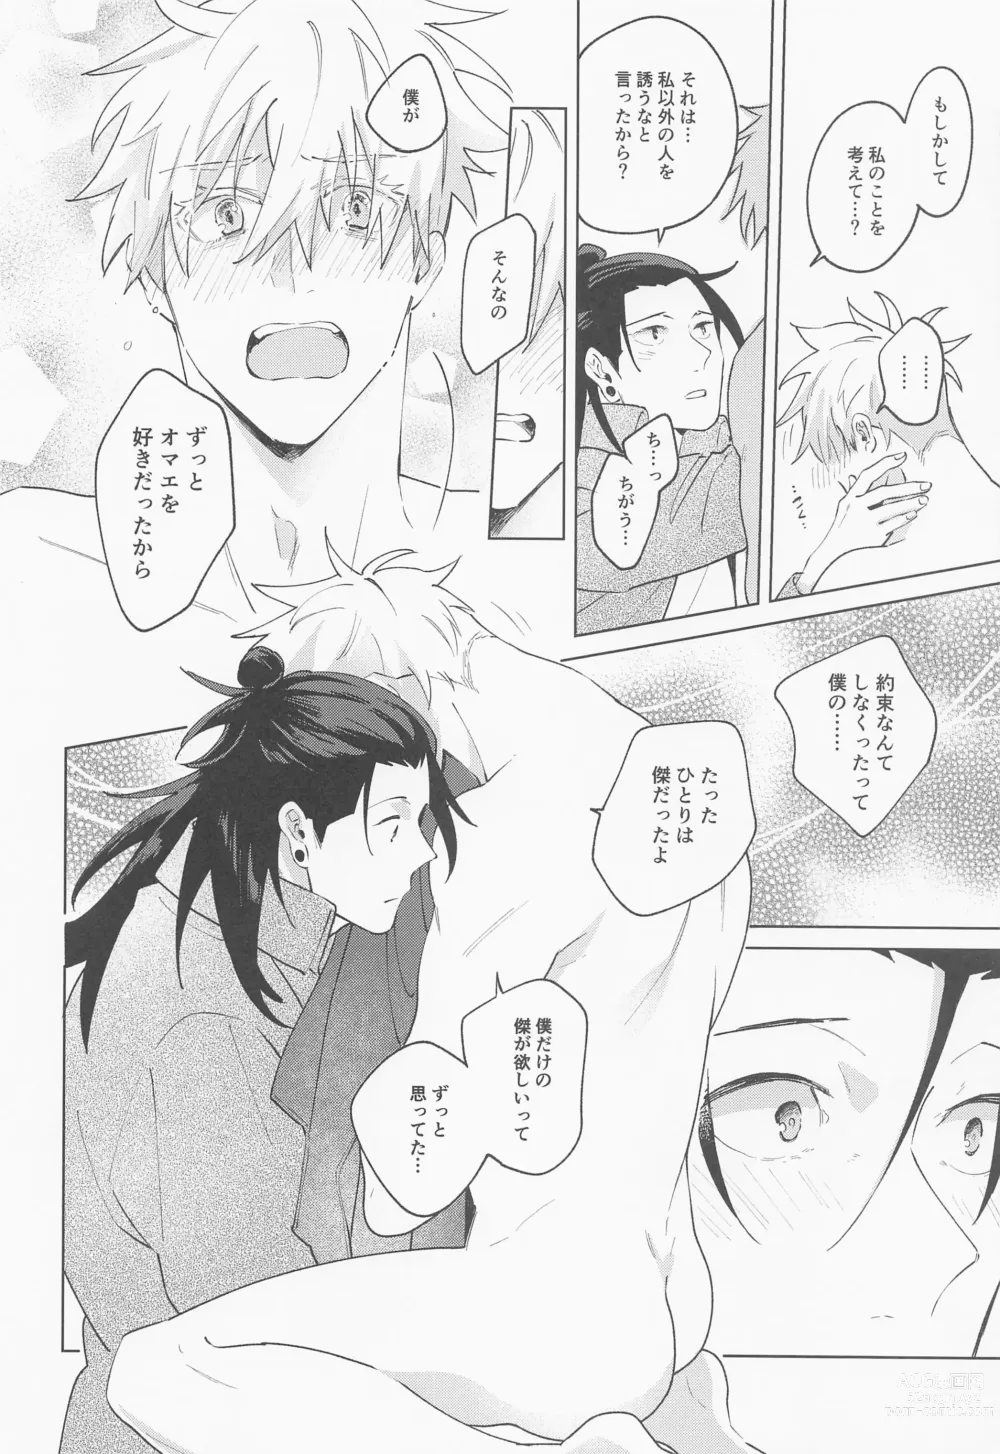 Page 53 of doujinshi Say you love me!